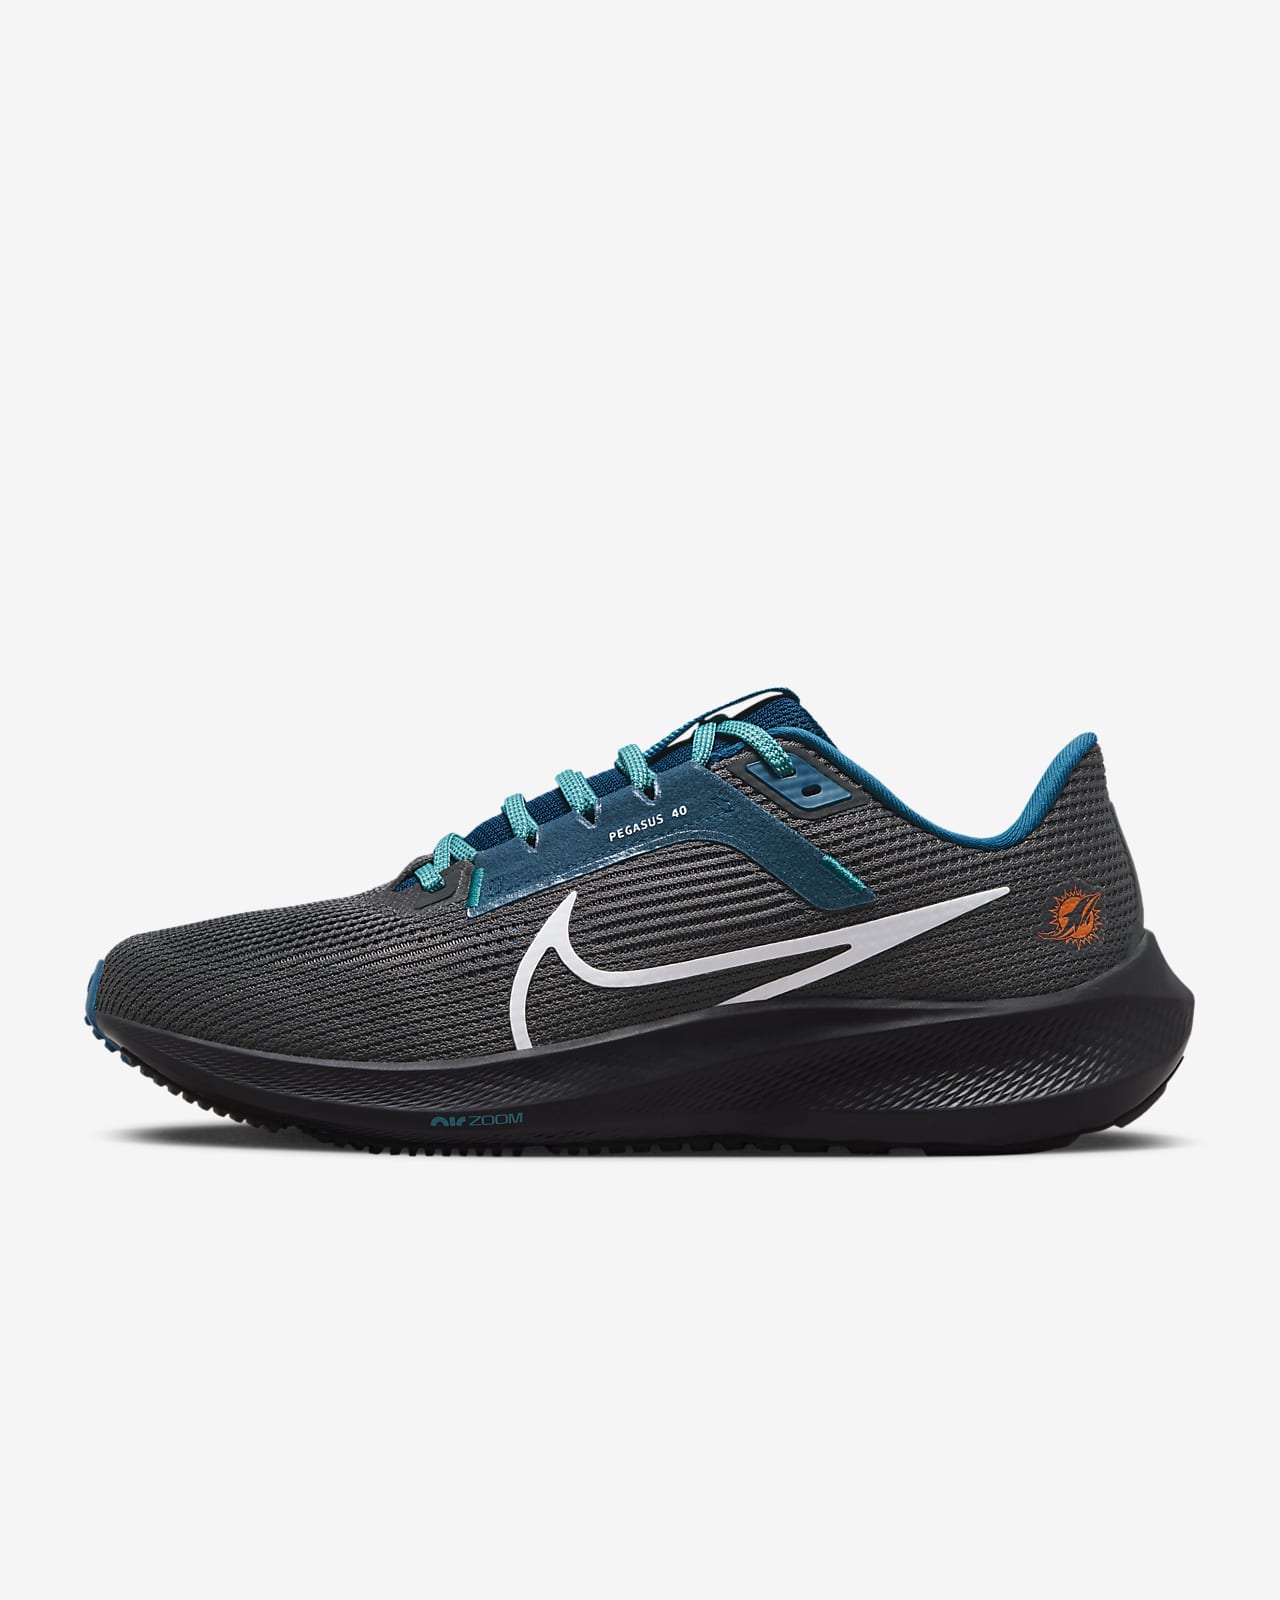 Nike Pegasus 40 (NFL Miami Dolphins) Men's Road Running Shoes